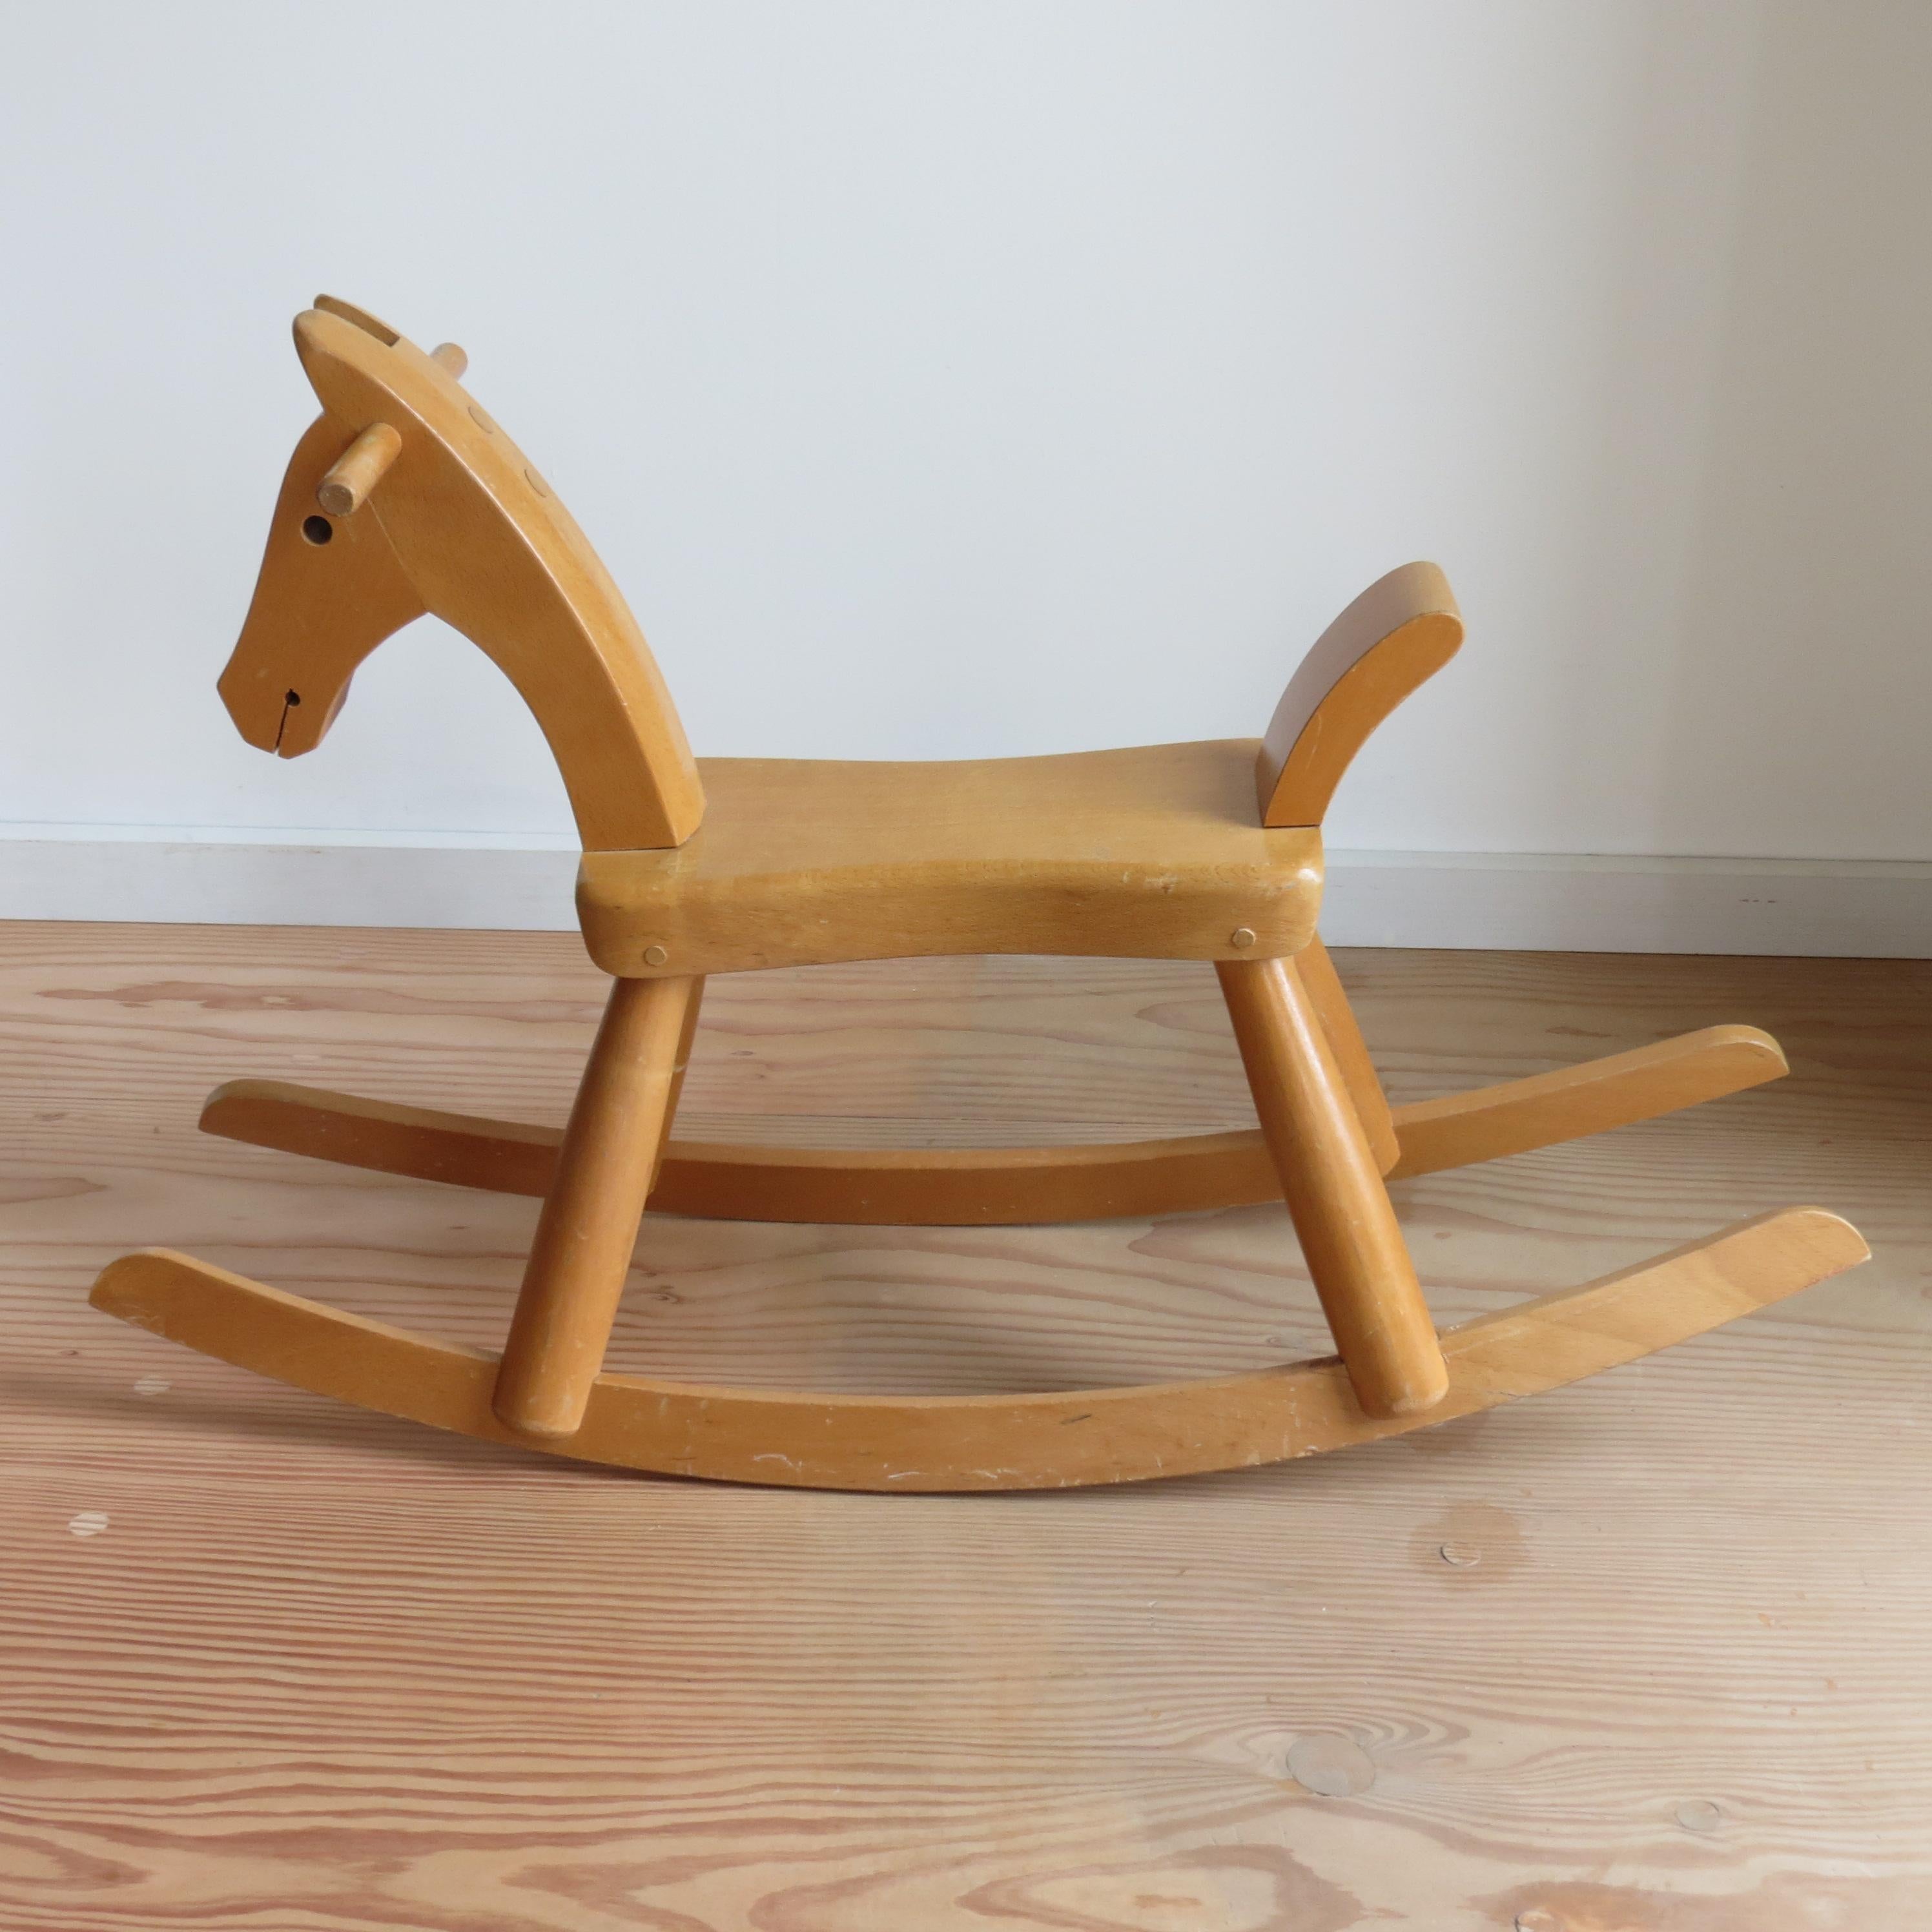 Machine-Made Original Vintage Danish Midcentury Kay Bojesen Wooden Rocking Horse